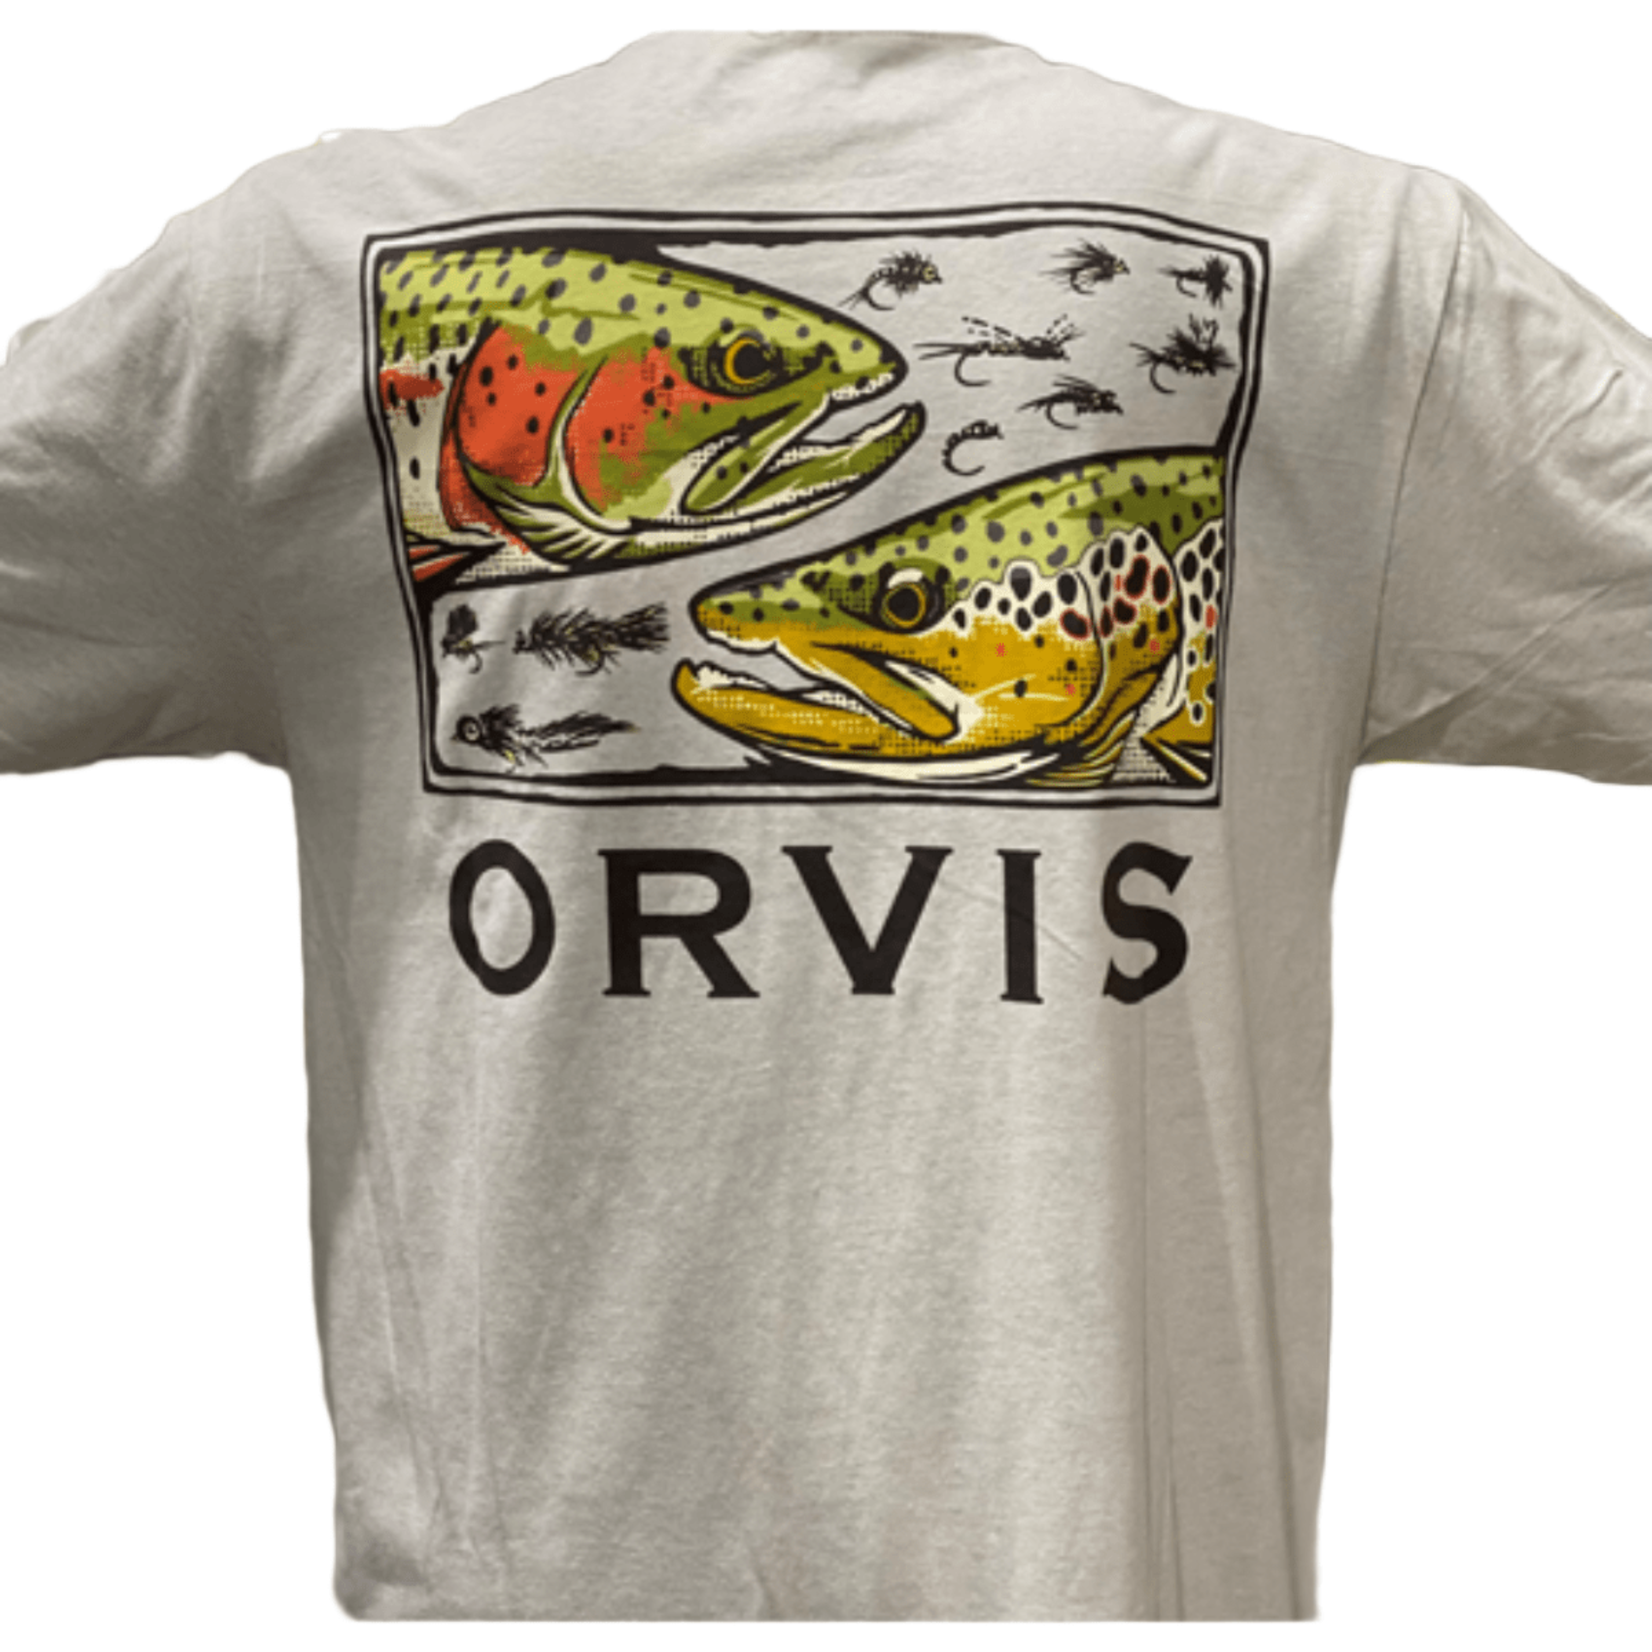 Orvis Orvis Trout Essentials T-shirt - Men's - Black Dog Outdoor Sports